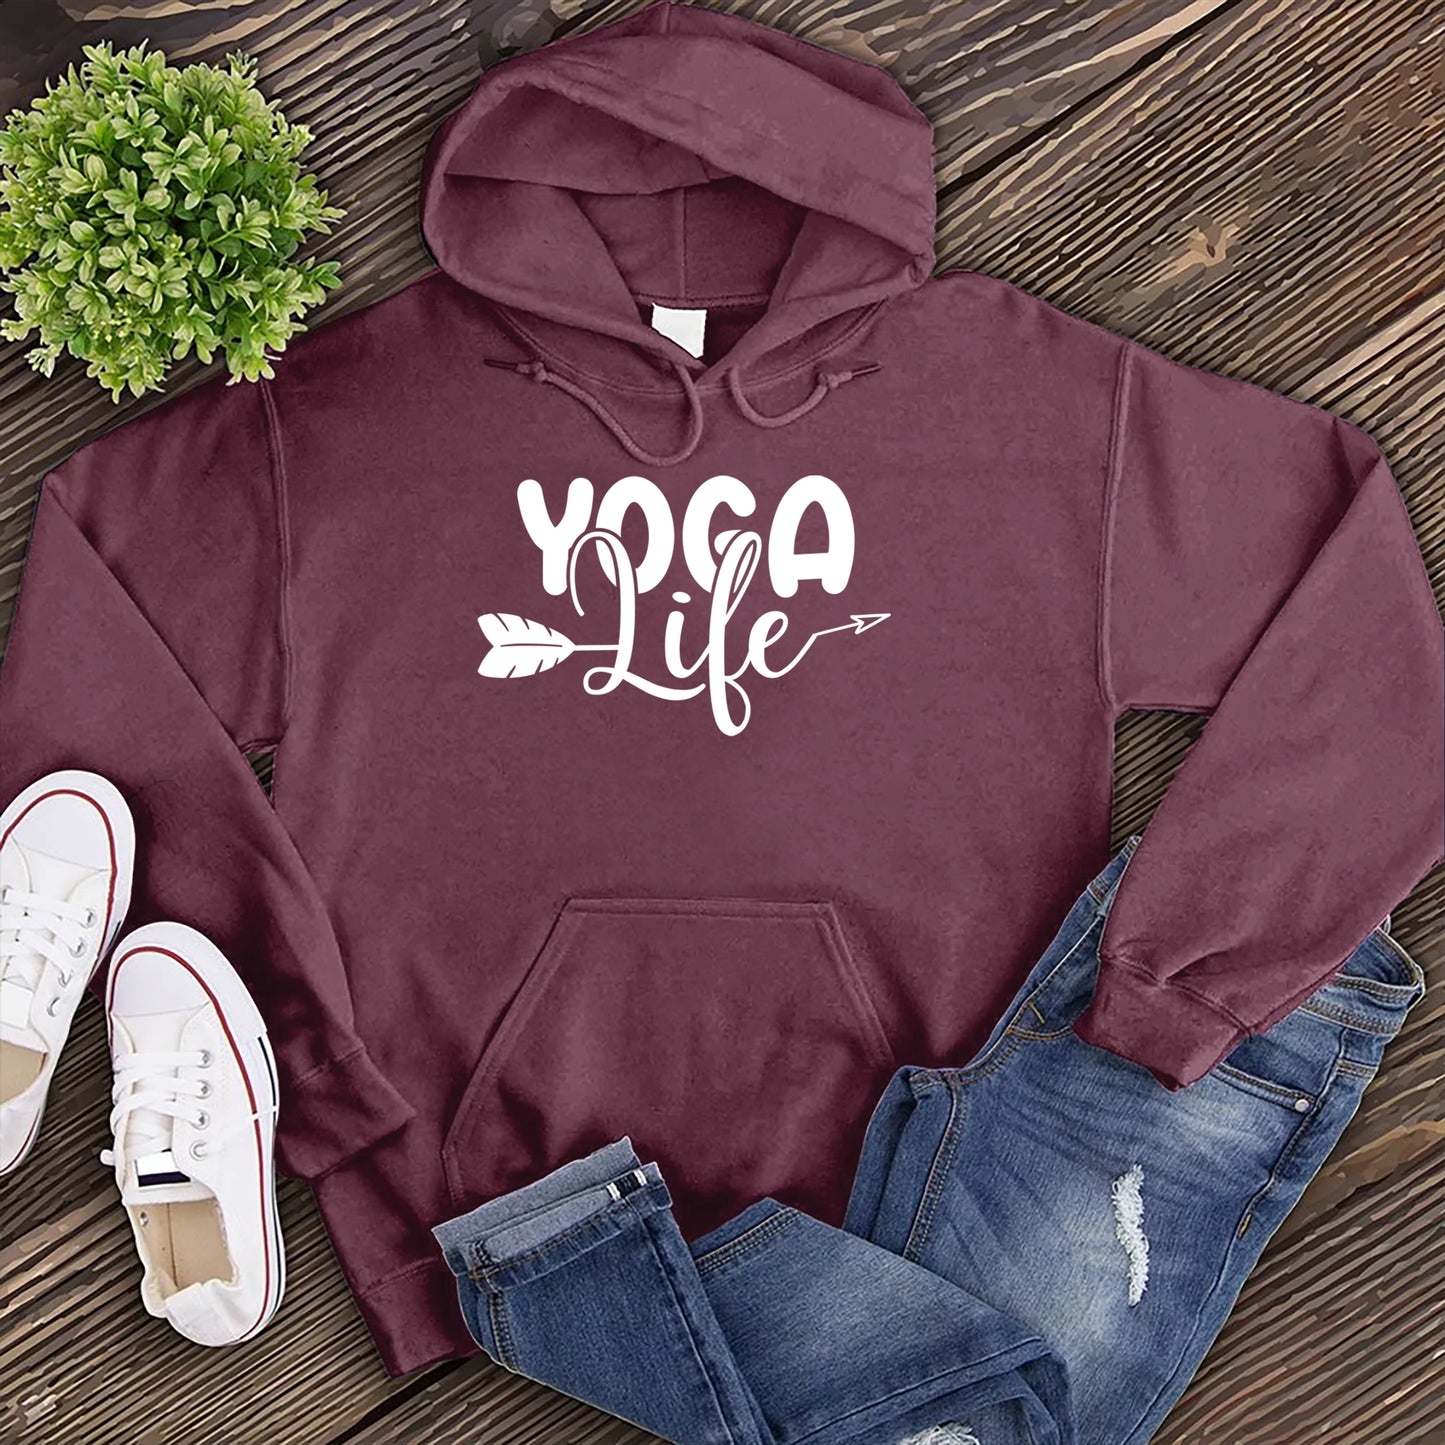 Yoga Life Hoodie